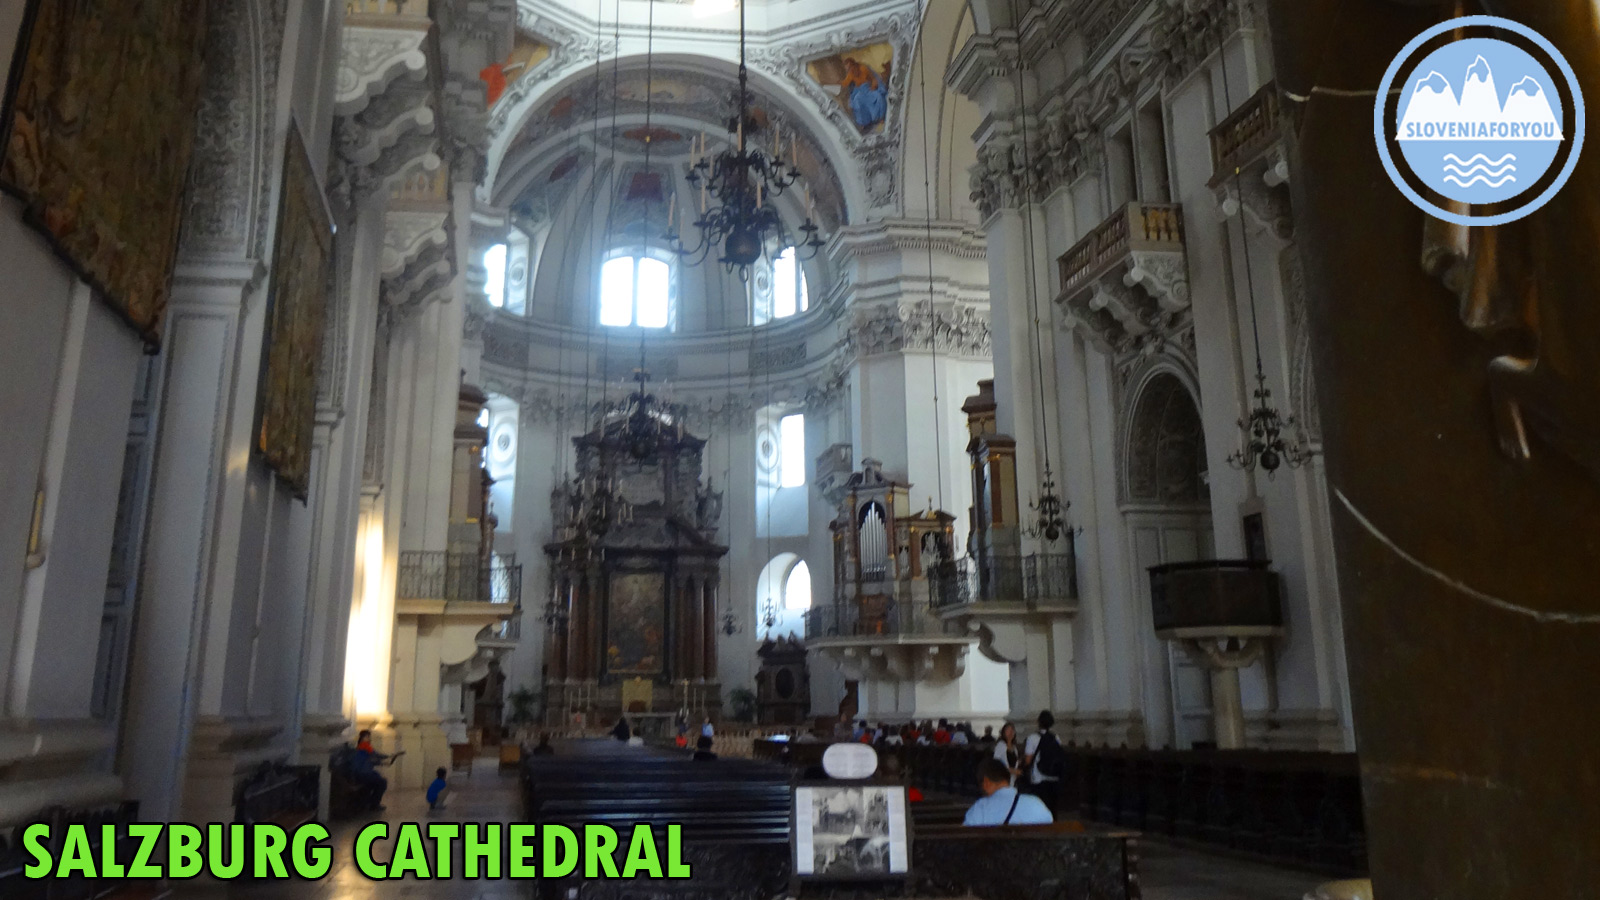 Salzburg Cathedral, Sloveniaforyou